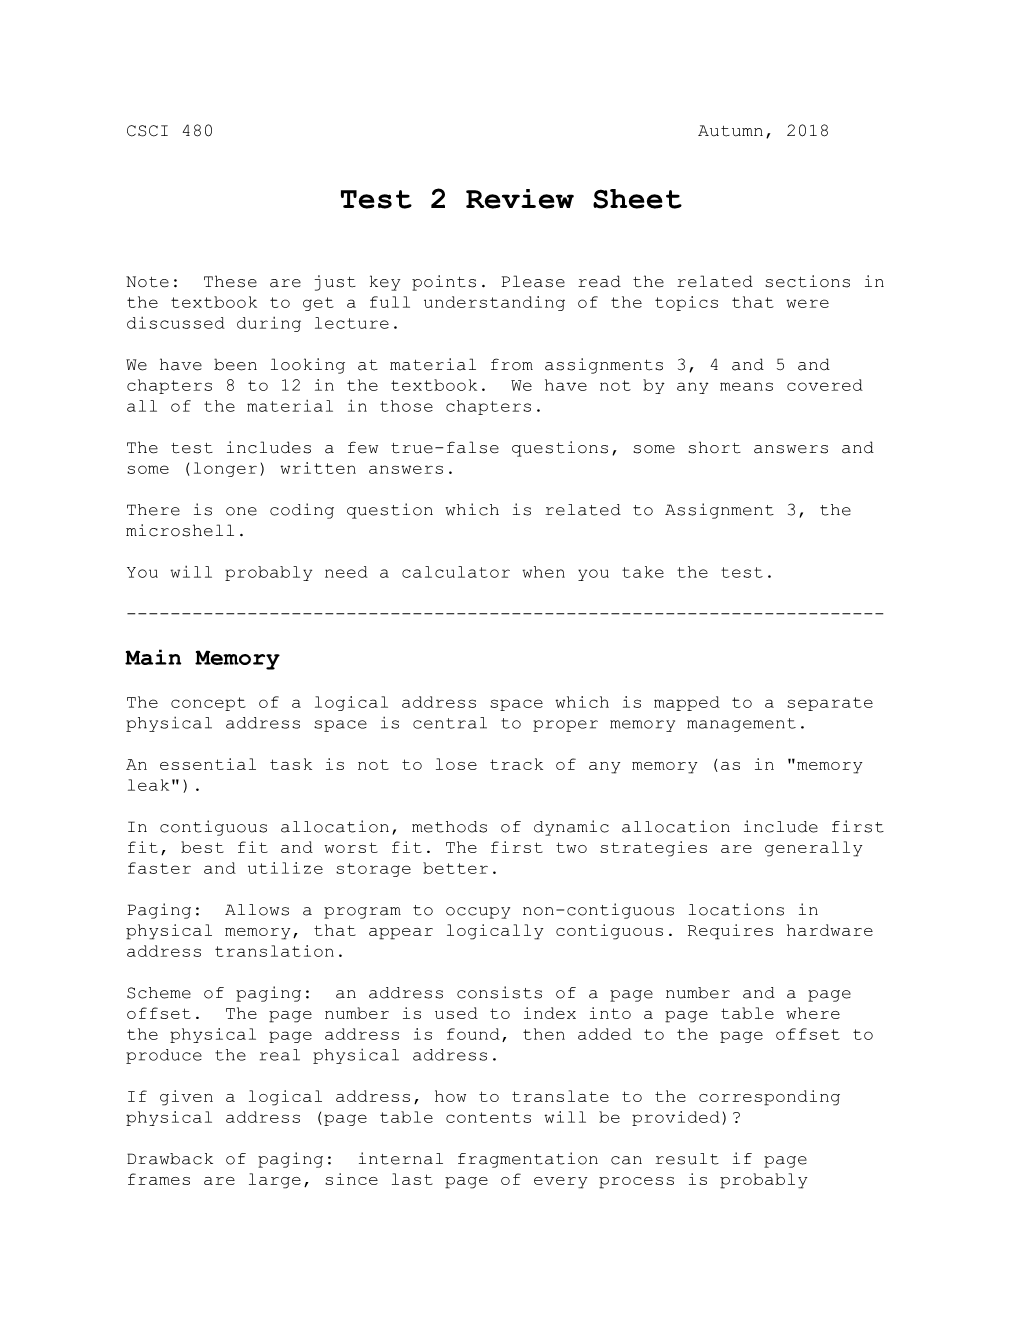 Test 2 Review Sheet